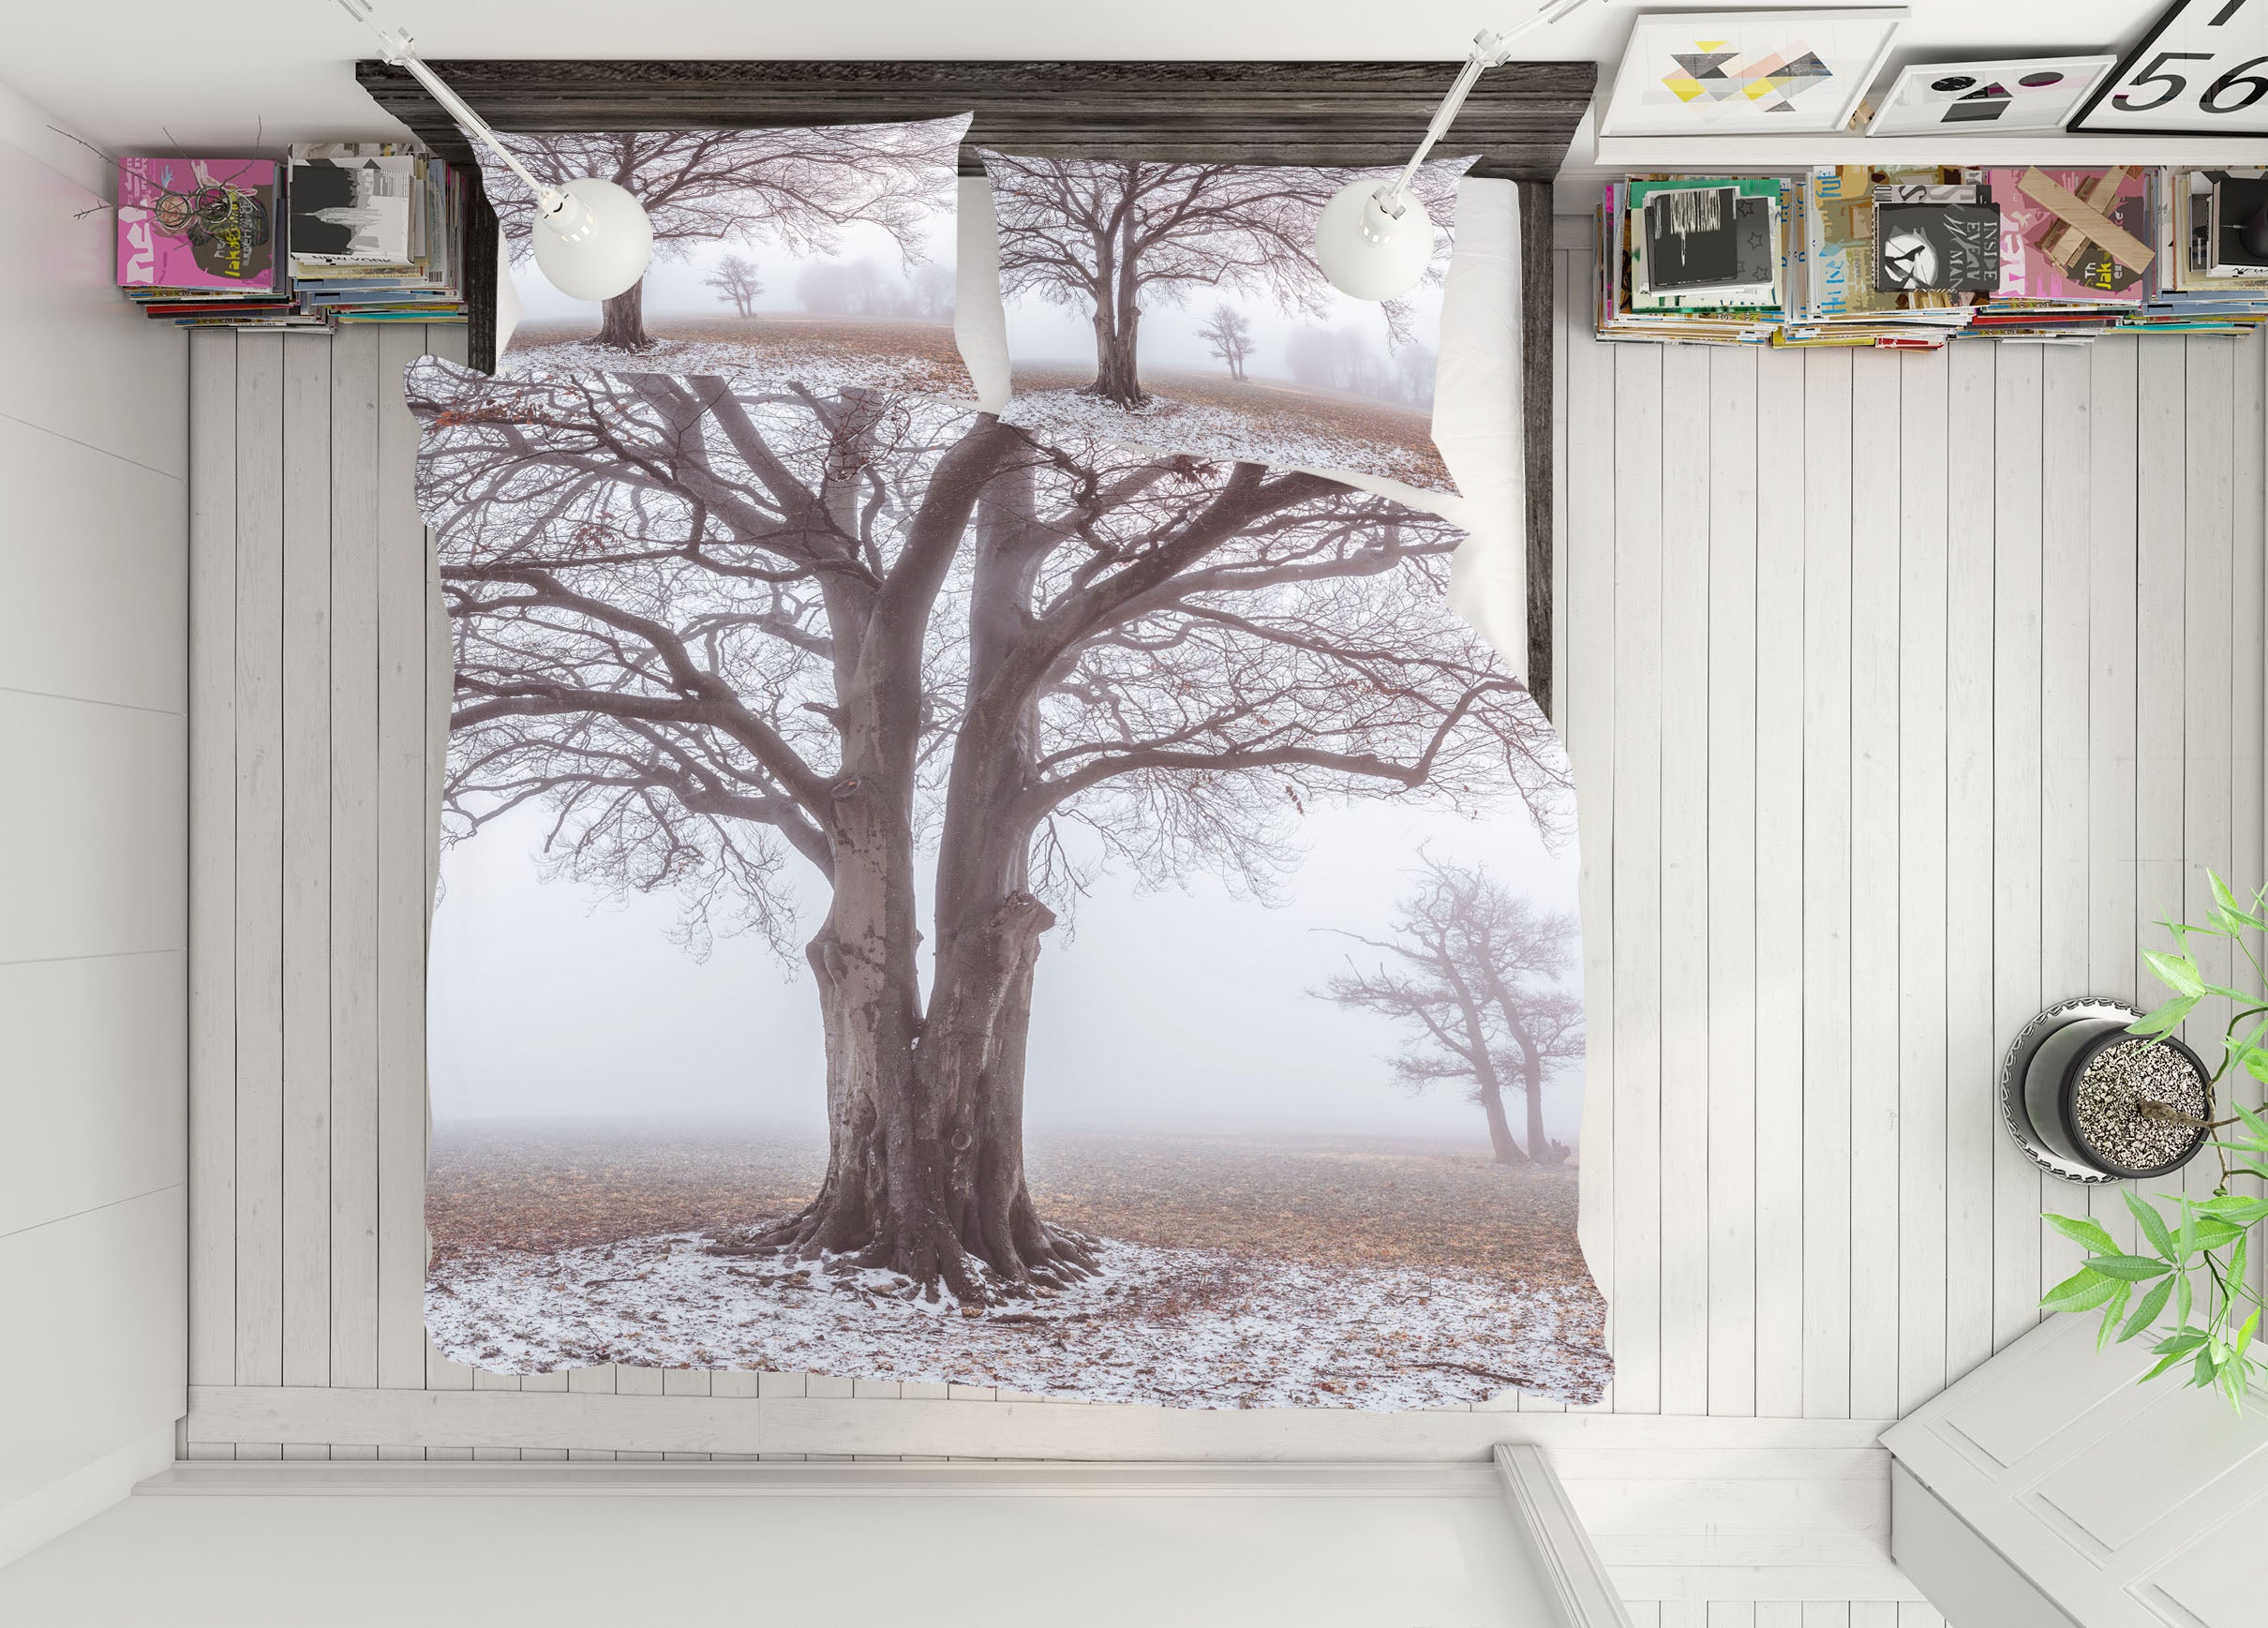 3D Hazy Forest 7168 Assaf Frank Bedding Bed Pillowcases Quilt Cover Duvet Cover